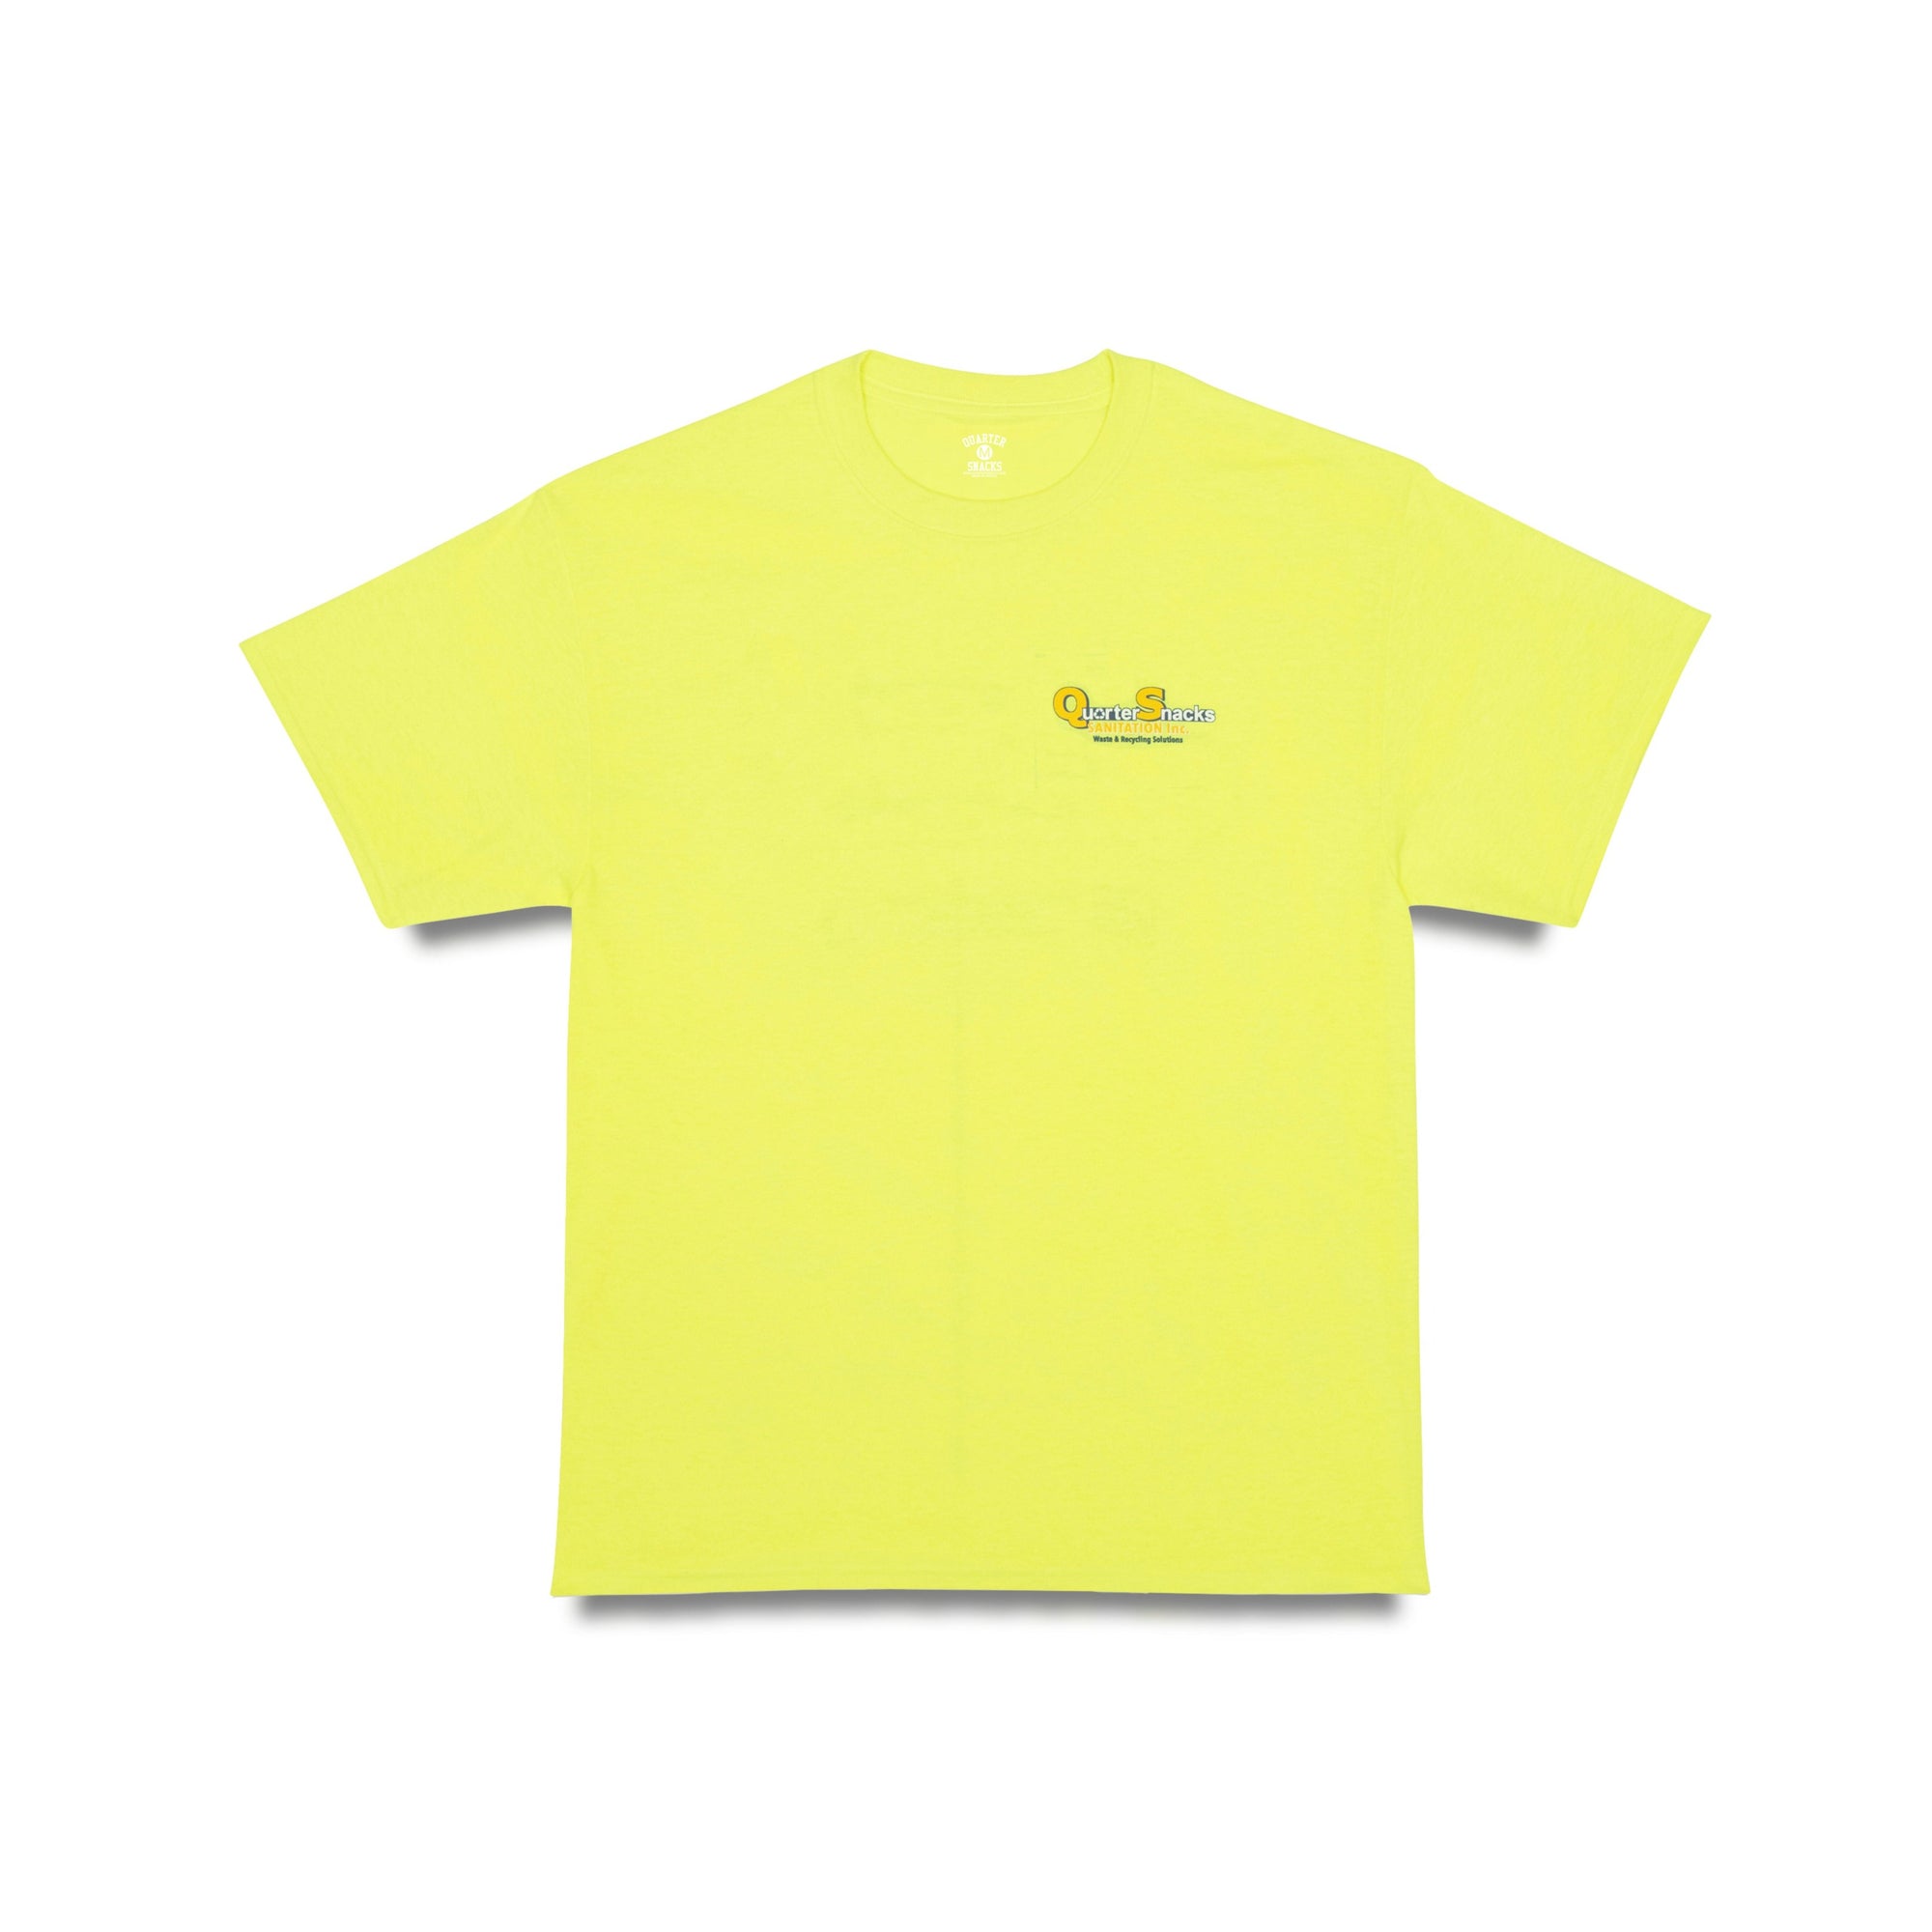 Quartersnacks Sanitation T-Shirt Neon Yellow